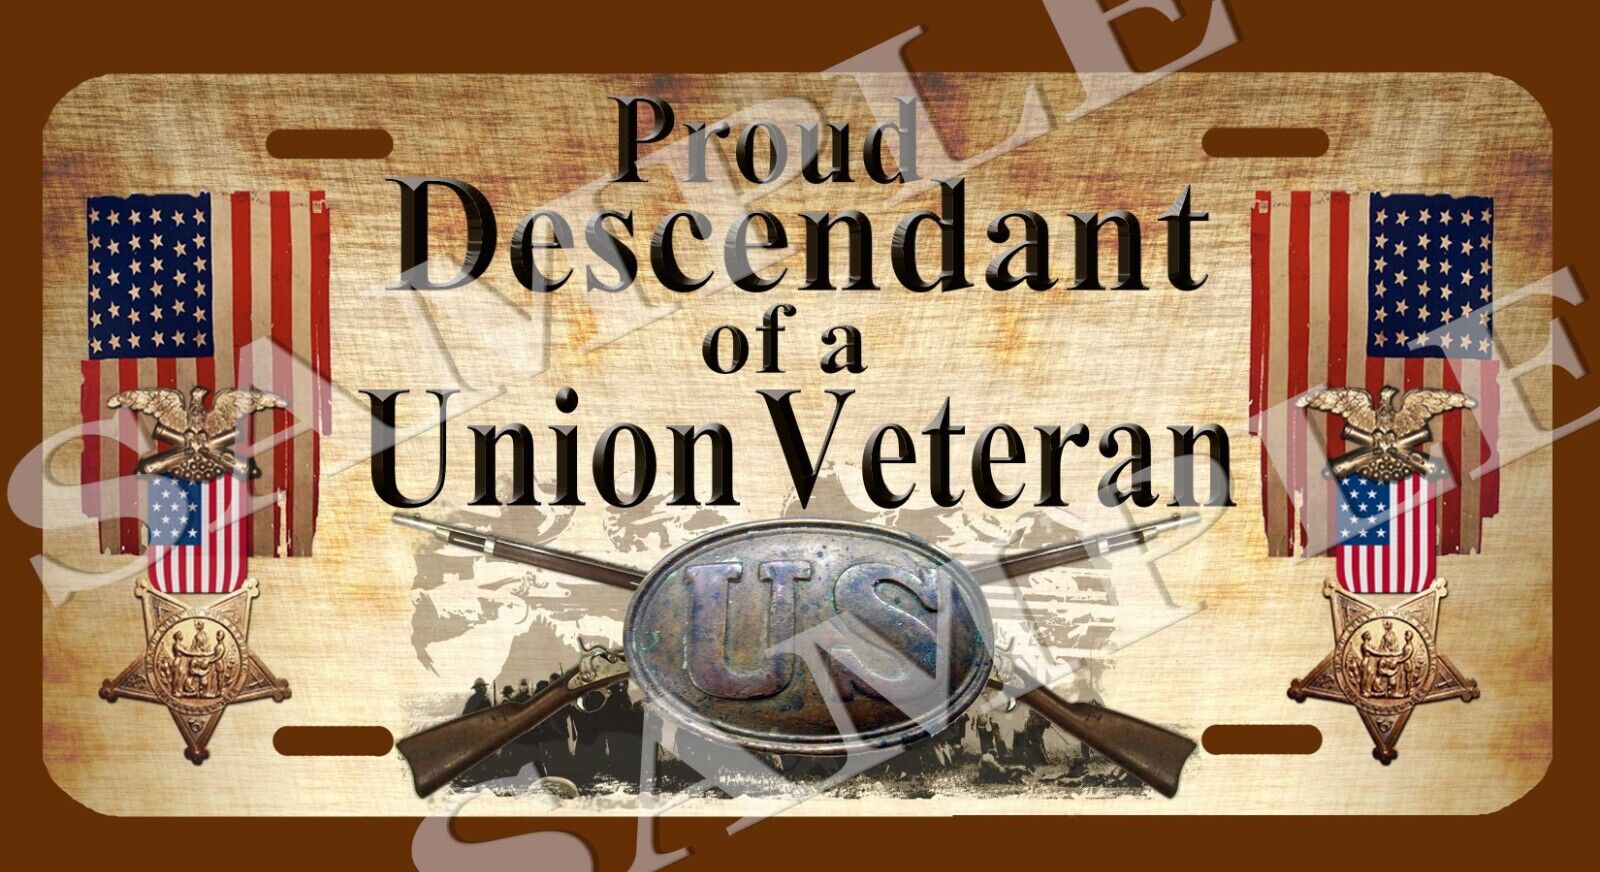 Proud Descendant of a Union Vet American Civil War Themed vehicle license plate